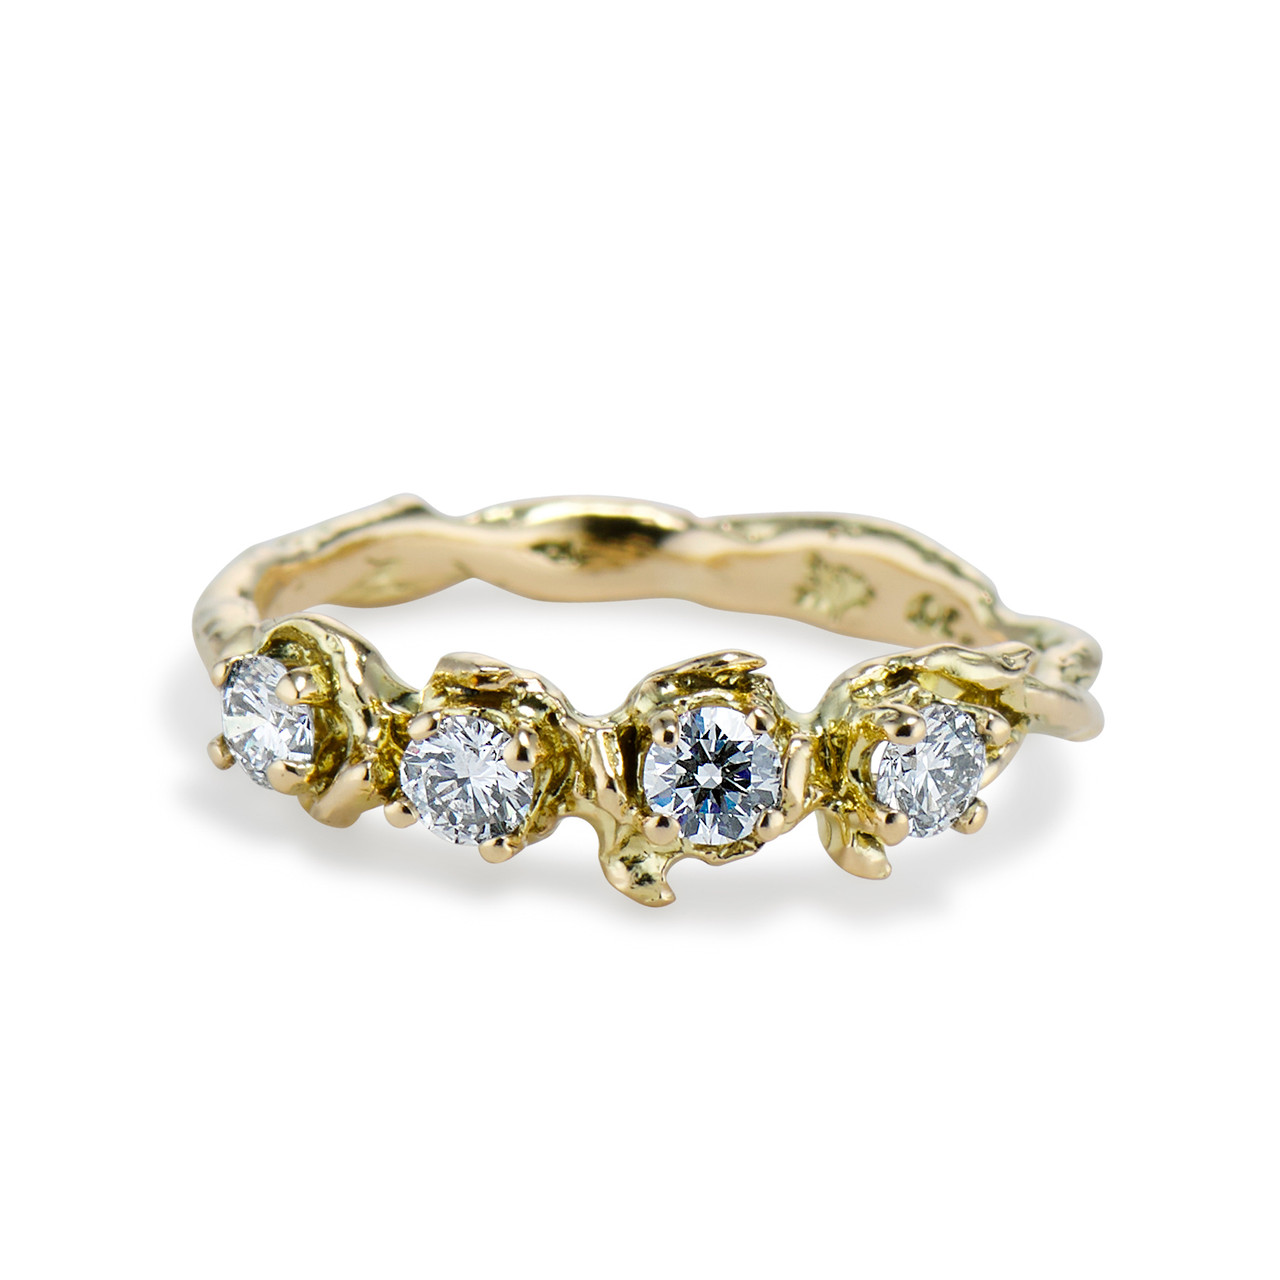 1.5 Ct Pave 4 Prong Round Cut Diamond Engagement Ring I1 H White Gold  Treated | eBay